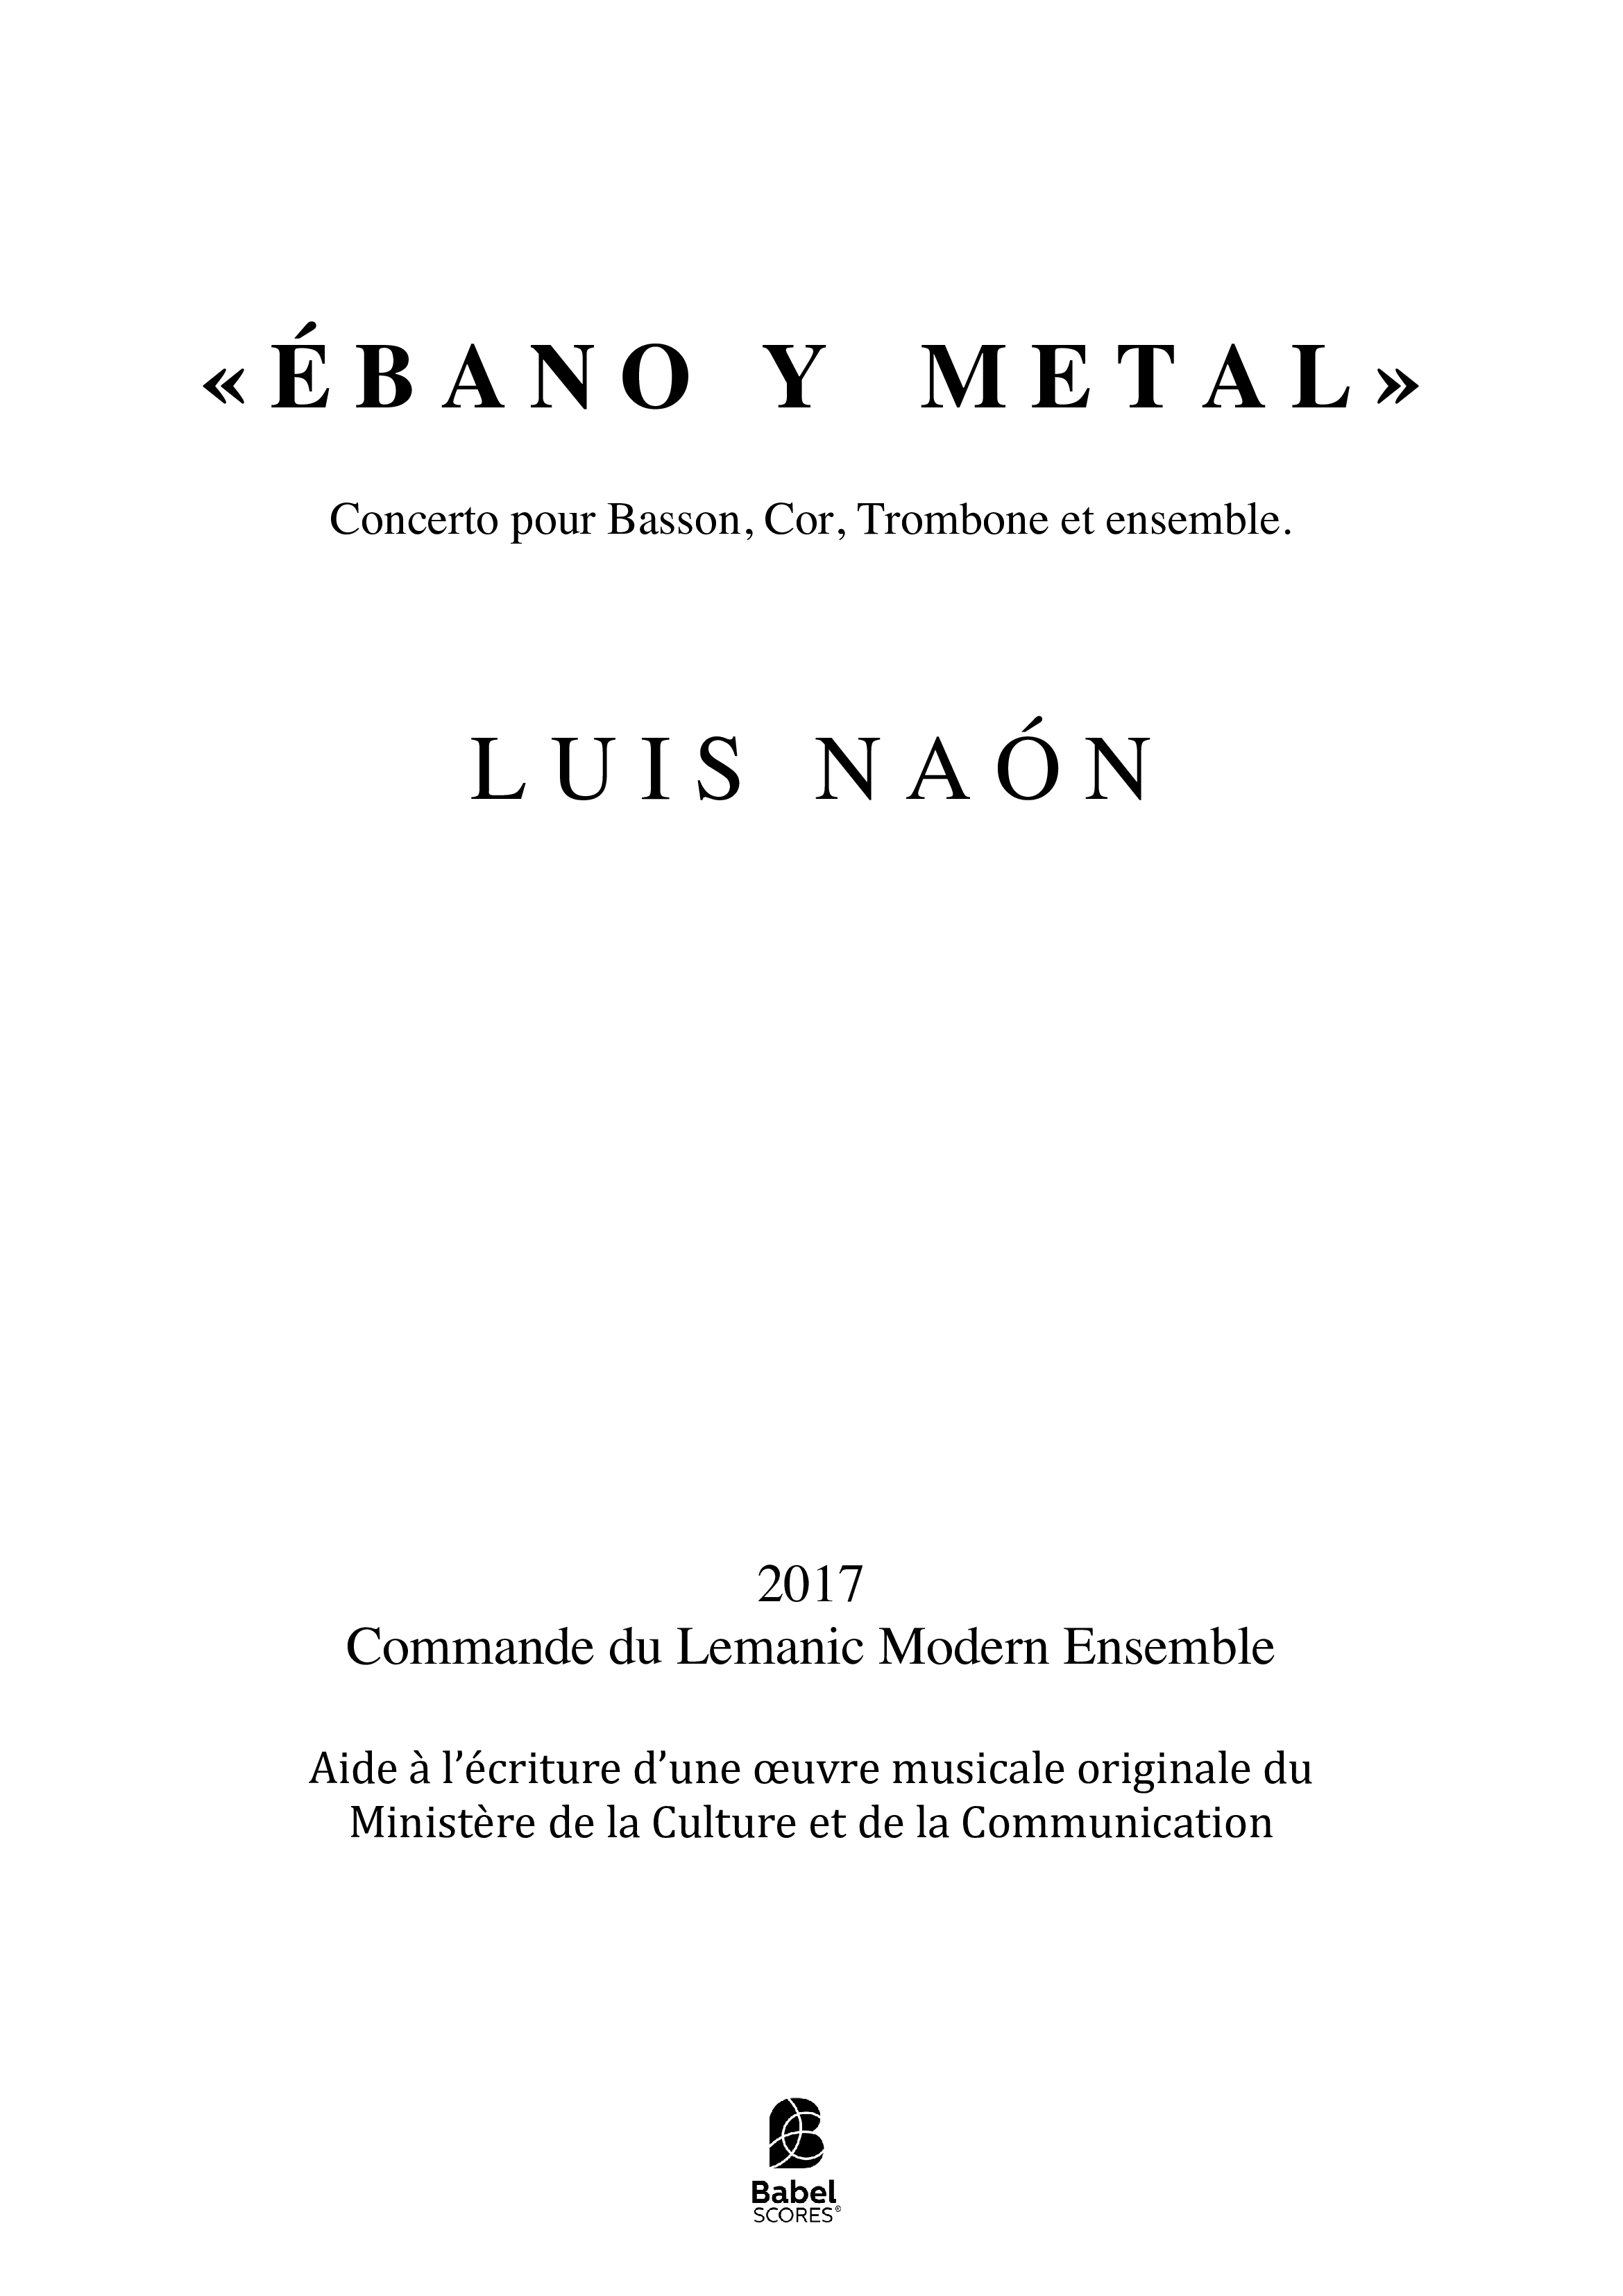 Ebano y Metal A3 z 2 226 10 386